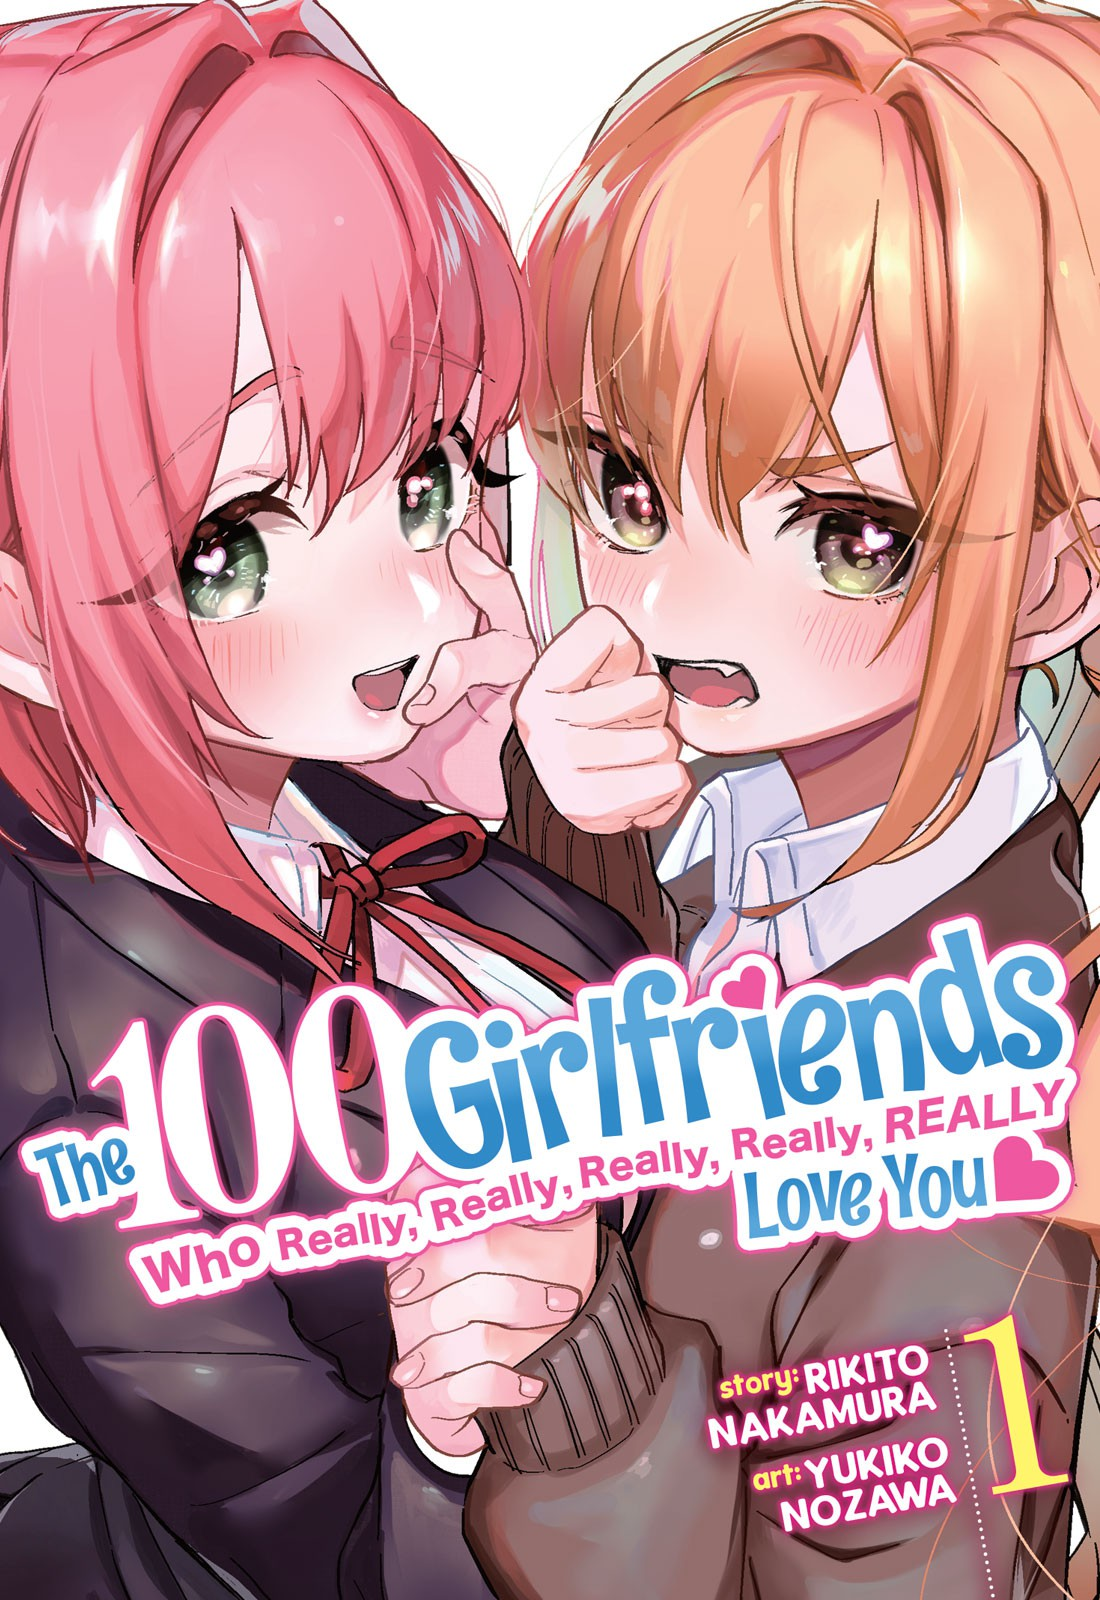 AnimeJapan-2022-top-10-manga-100-Girlfriends-Who-really-really-really-love-you